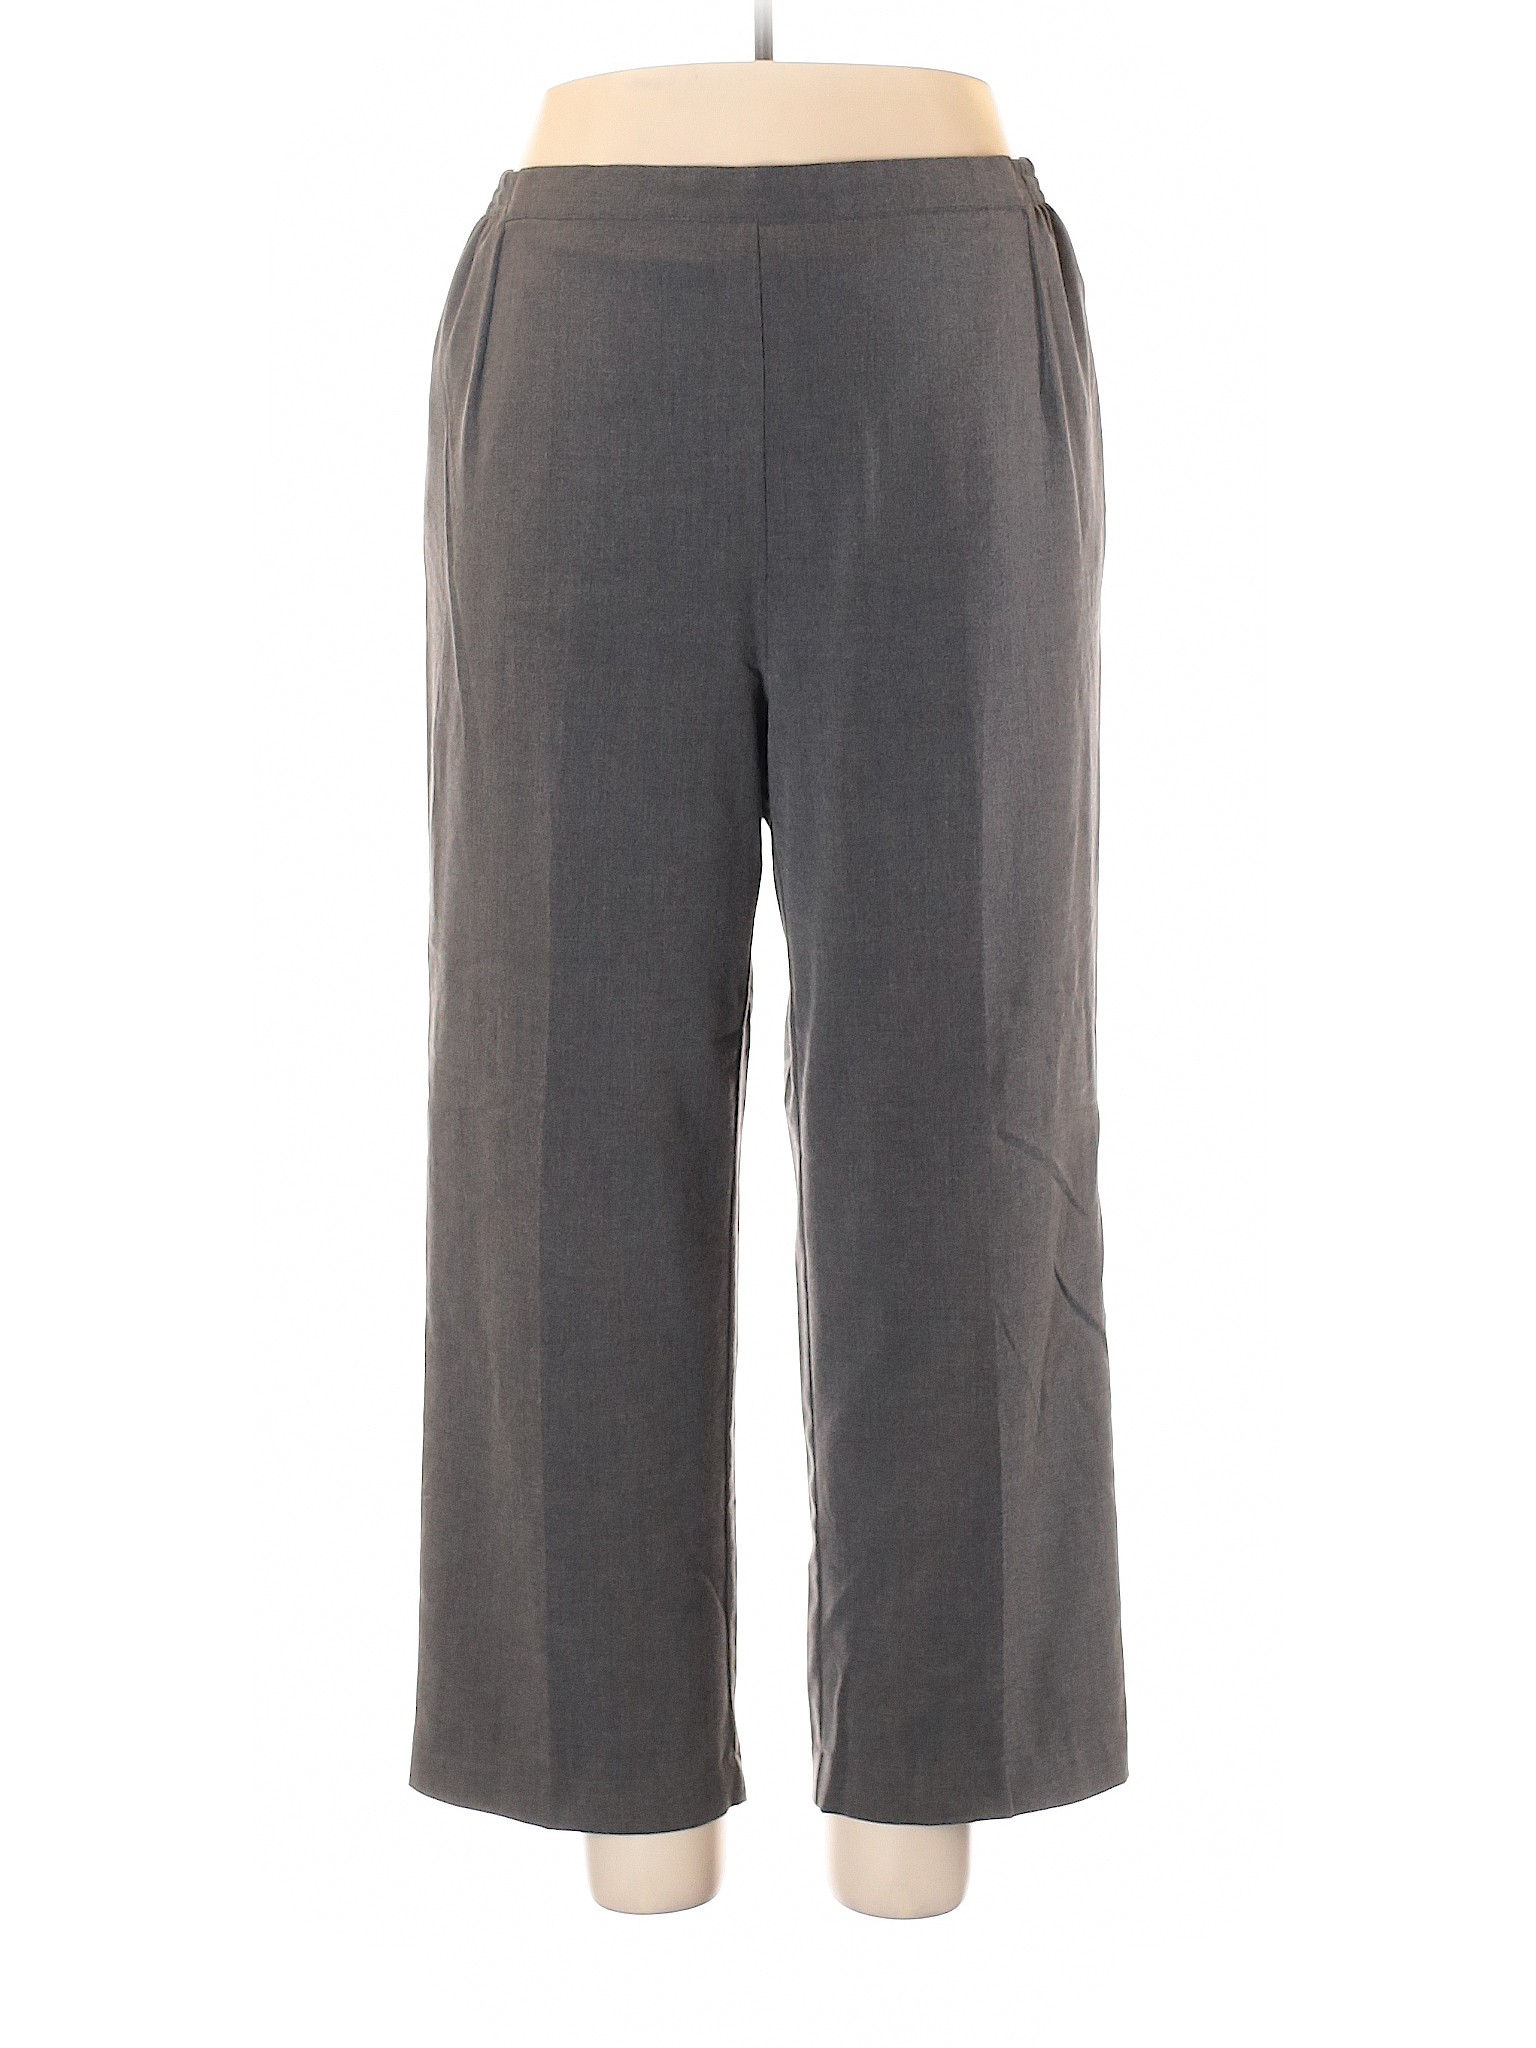 Koret Women Gray Dress Pants 16 | eBay